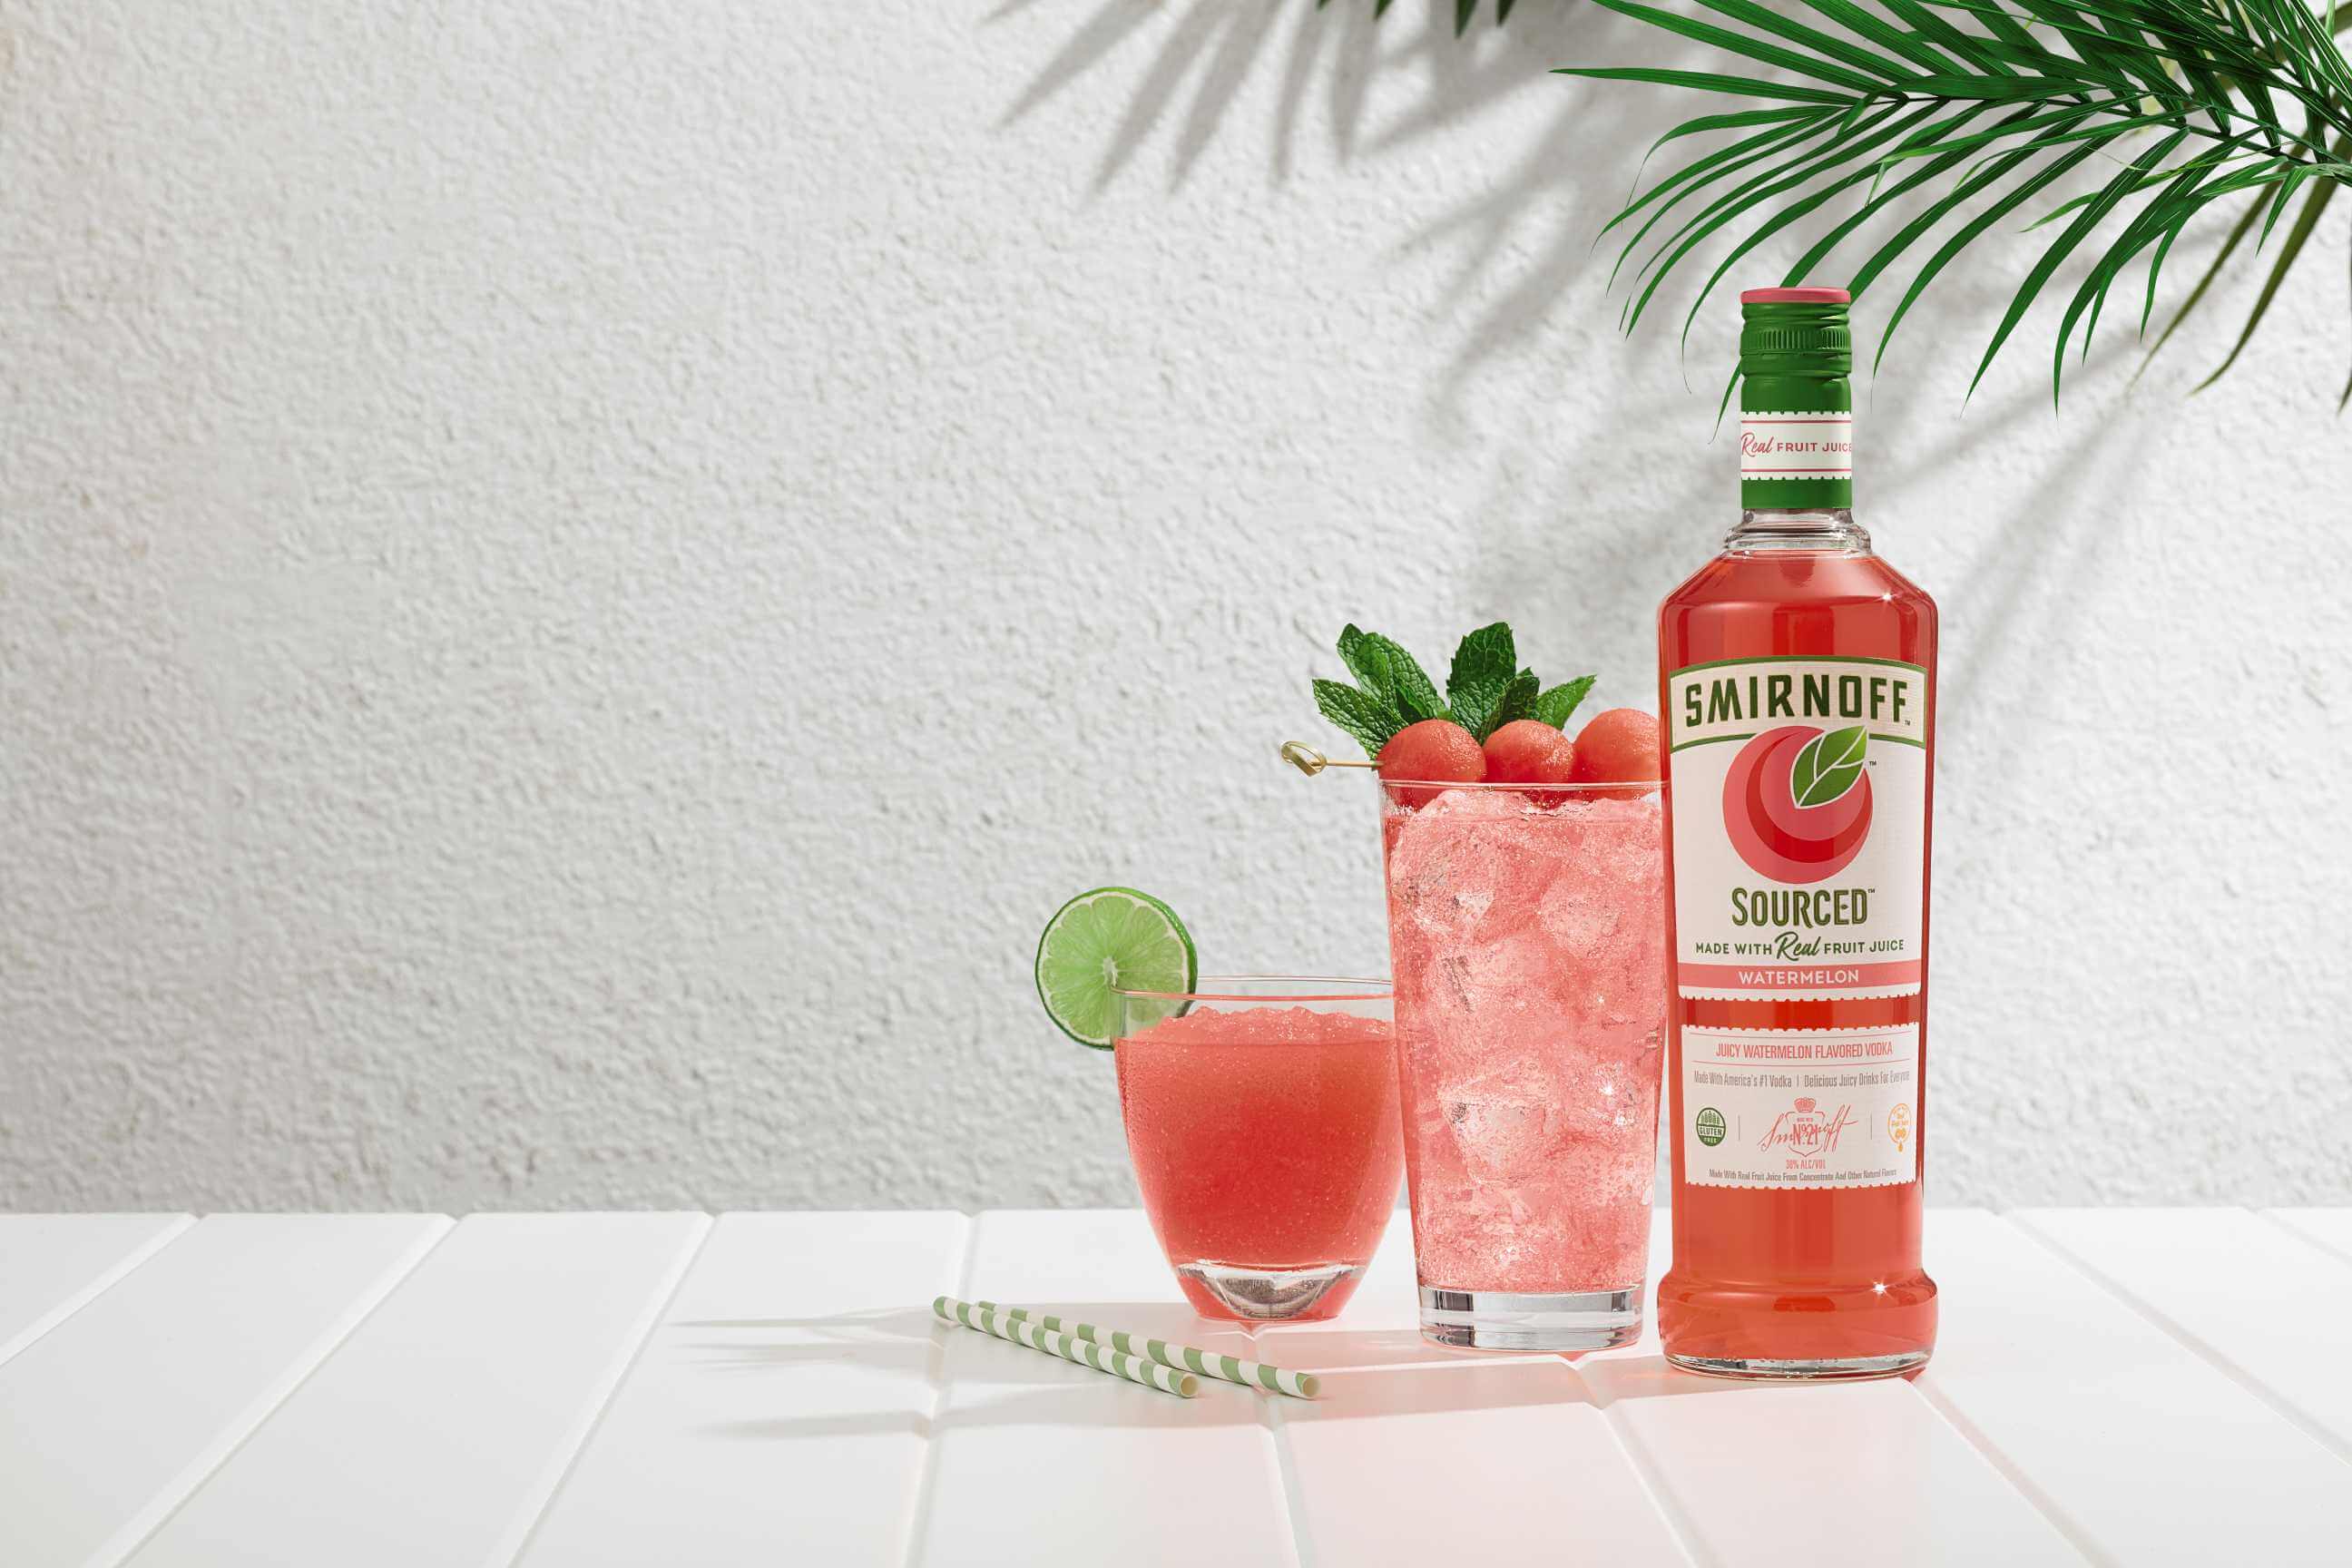 Smirnoff Premium Vodka launches Smirnoff Sourced Watermelon Vodka for National Watermelon Day - What's Shakin' week of July 24